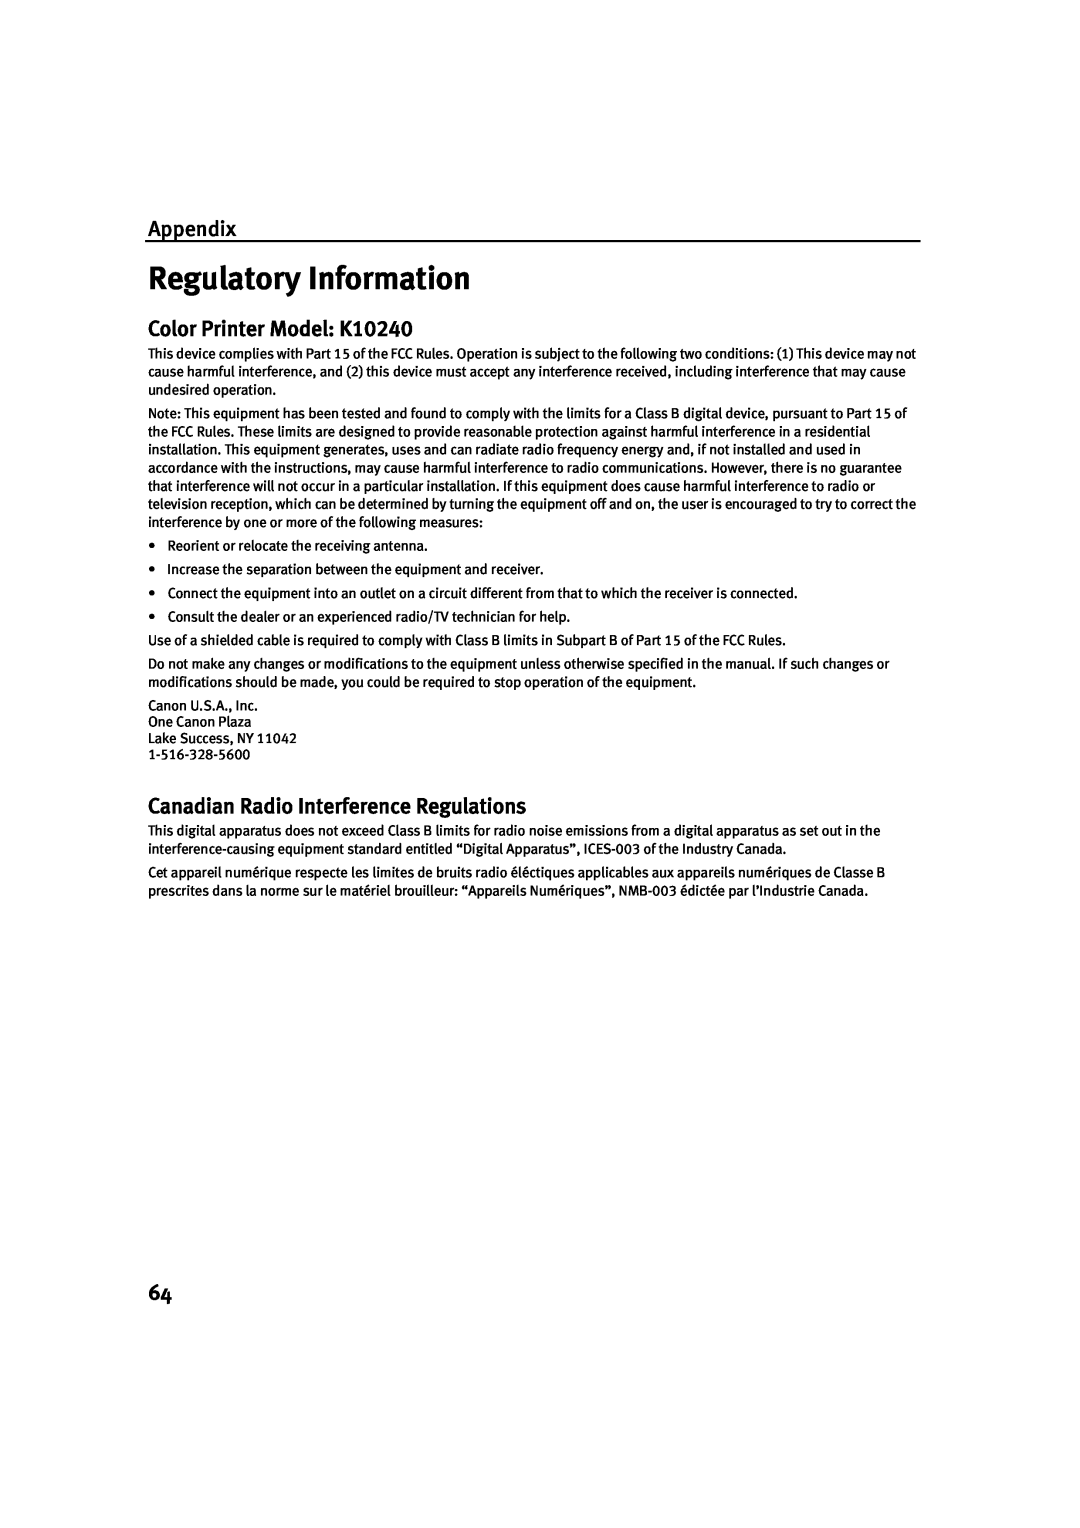 Canon IP1500 Regulatory Information, Appendix, Color Printer Model K10240, Canadian Radio Interference Regulations 